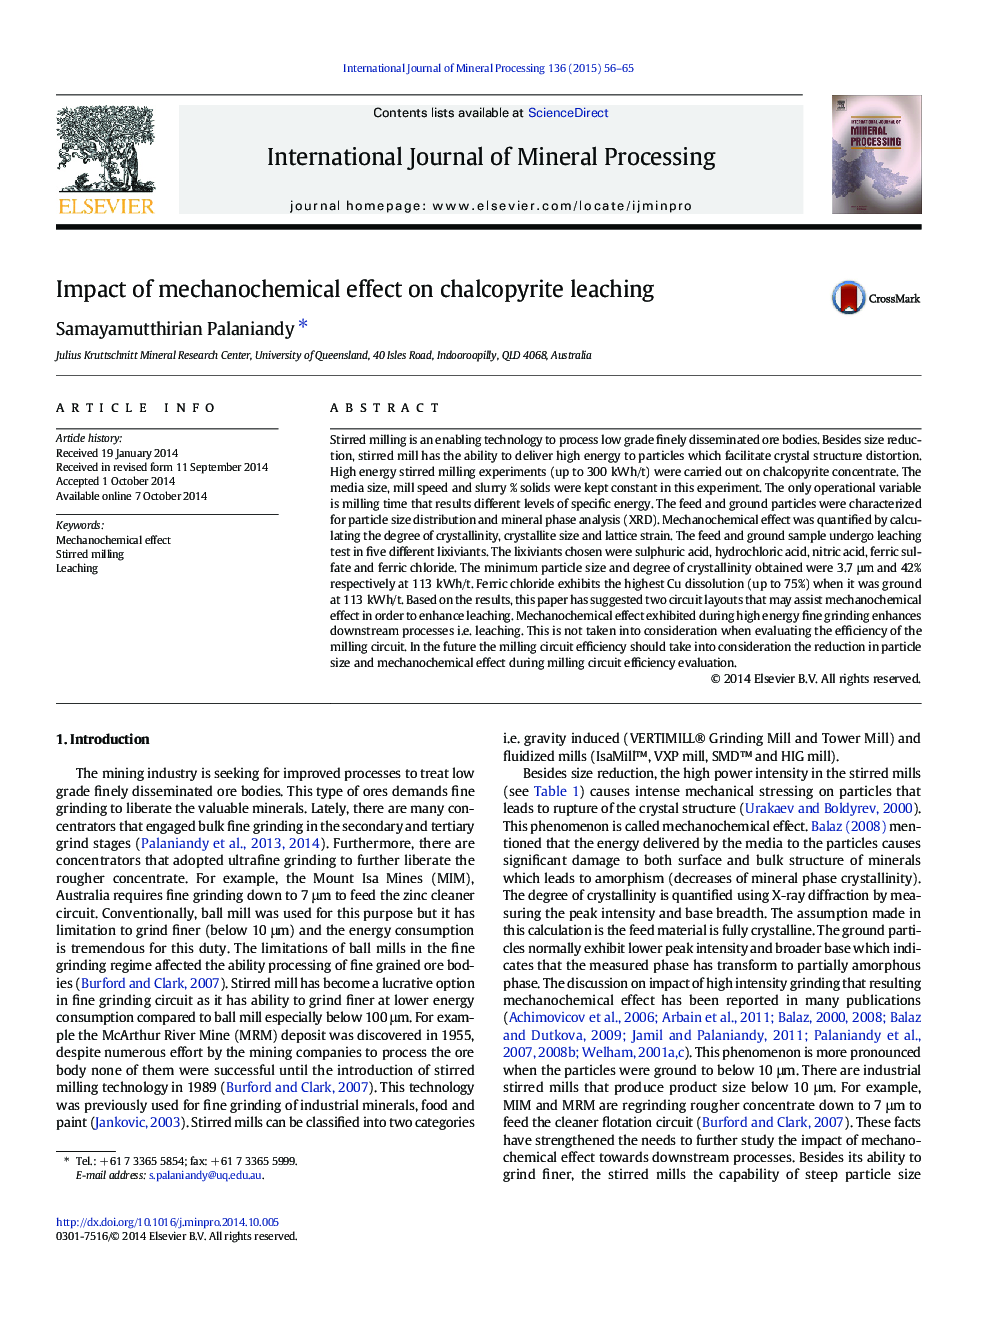 Impact of mechanochemical effect on chalcopyrite leaching